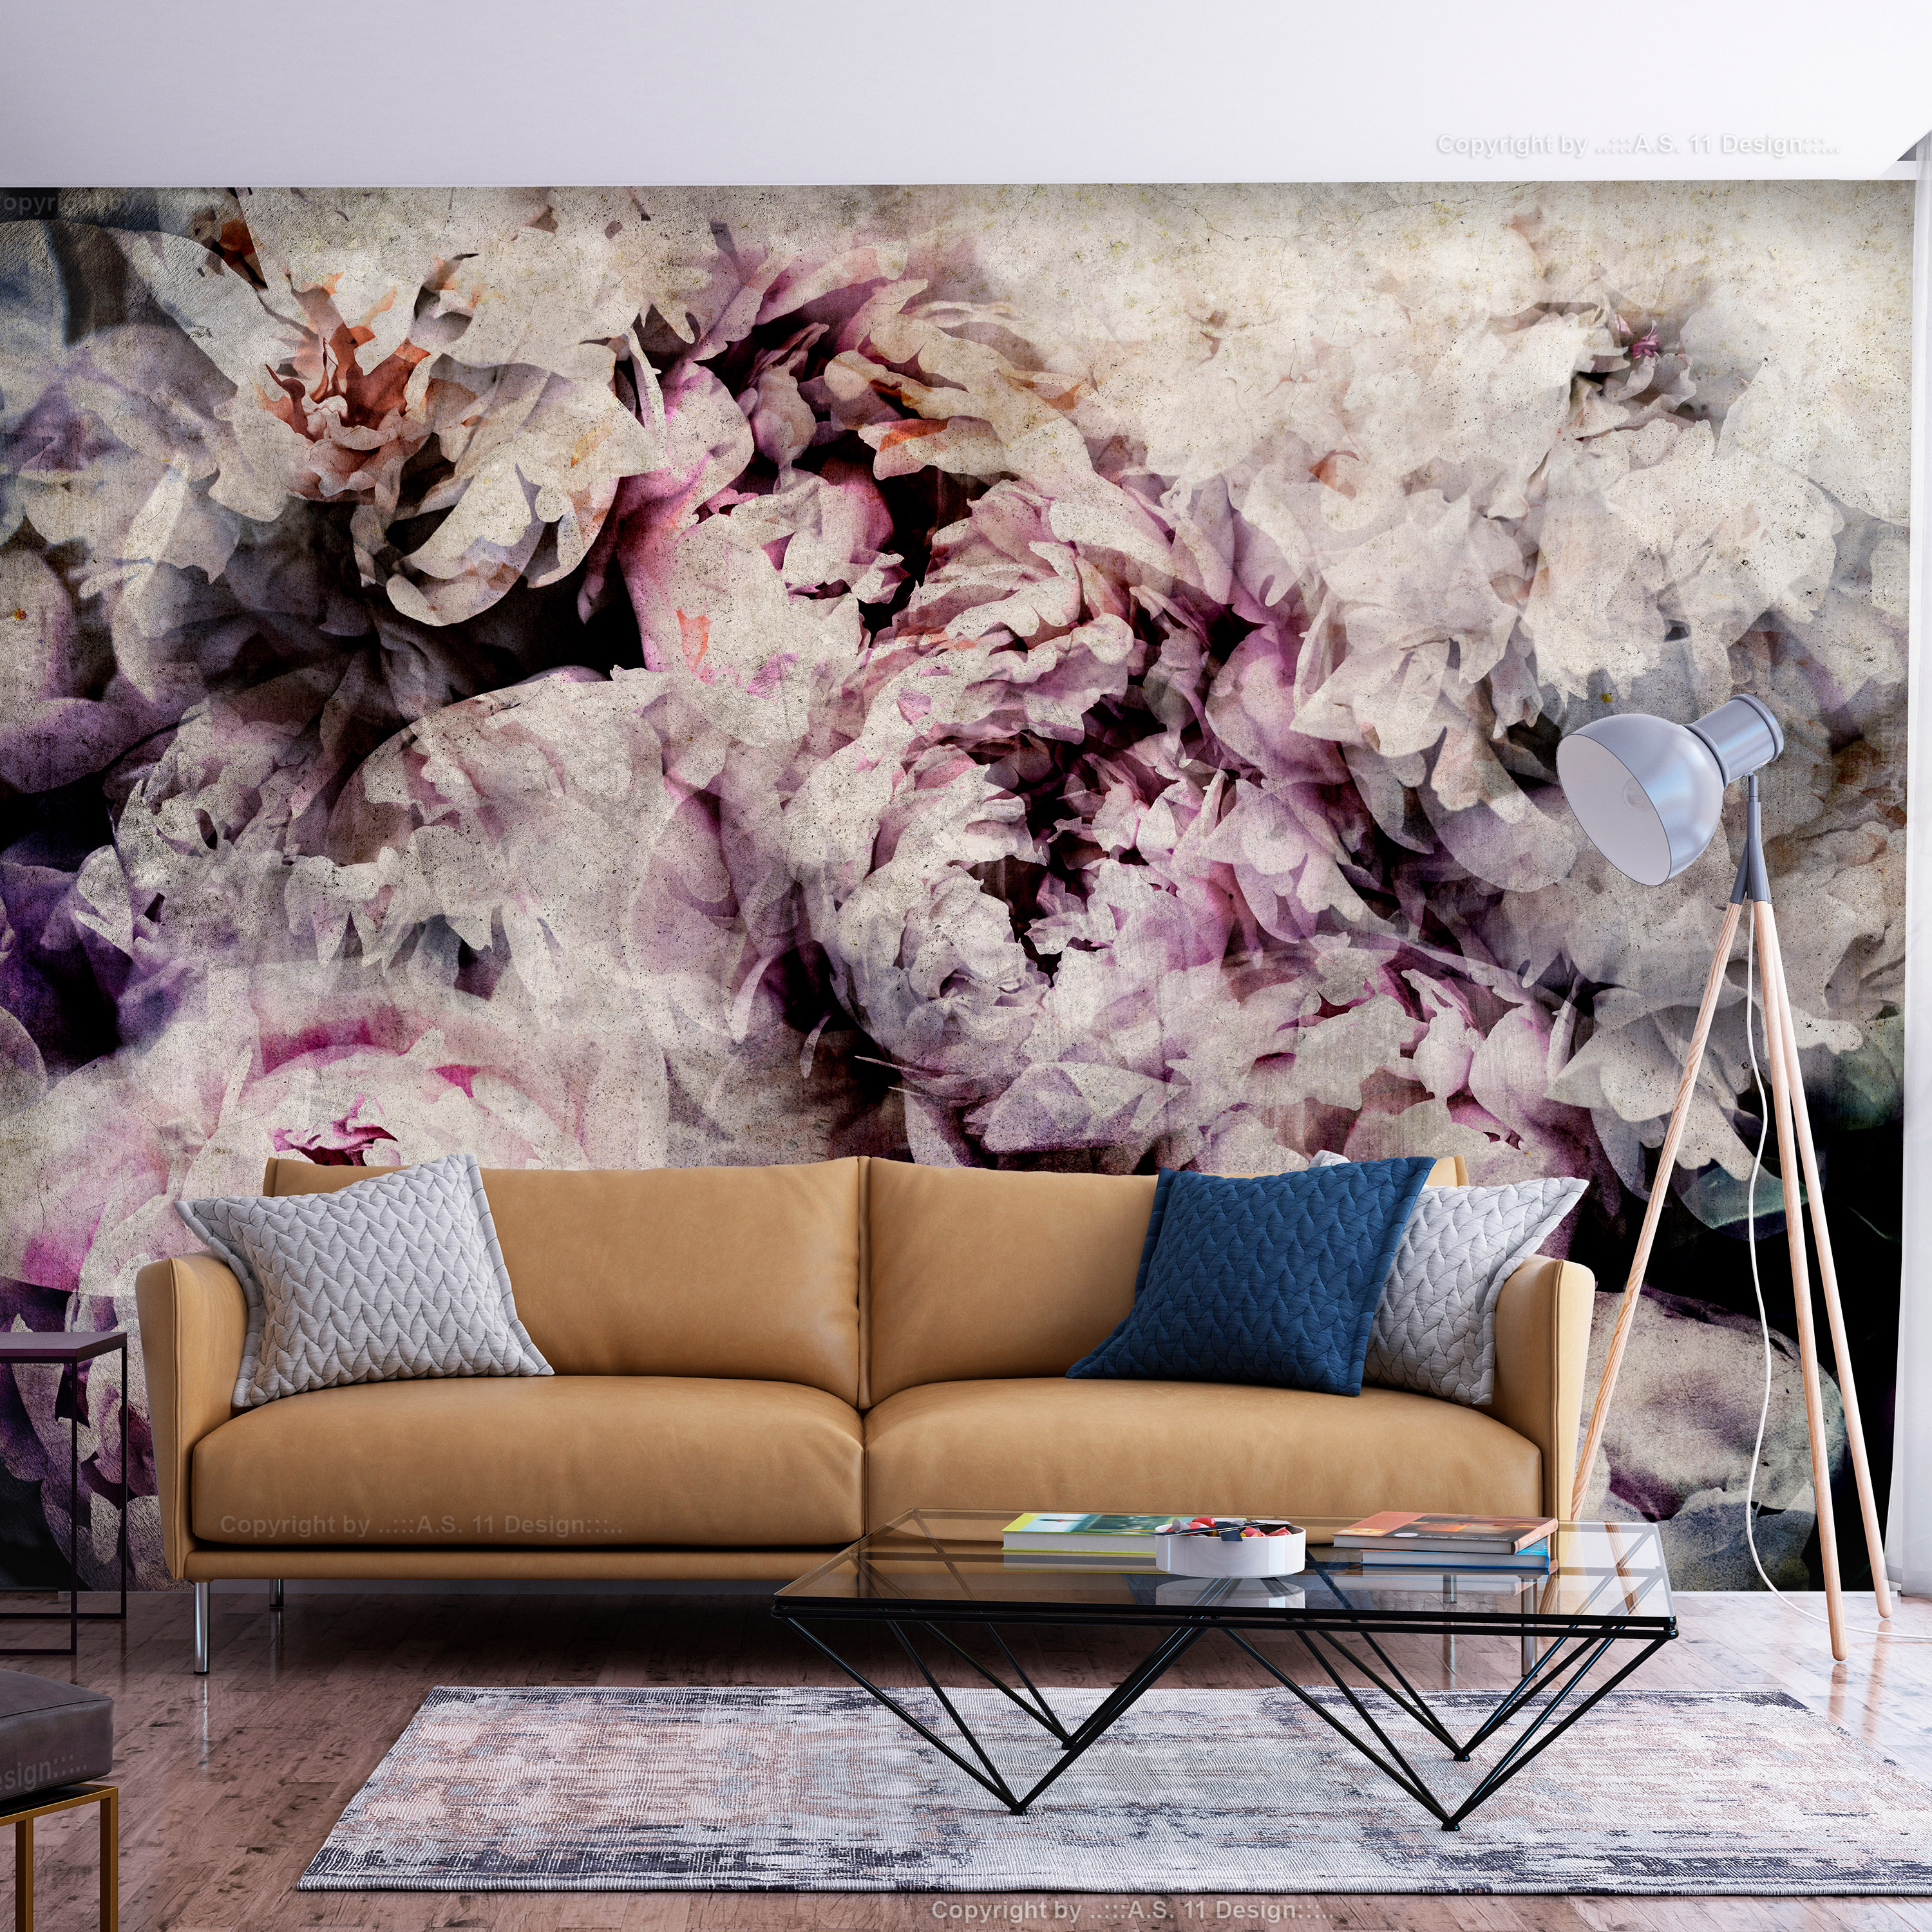 Wallpaper - Home Flowerbed - 100x70